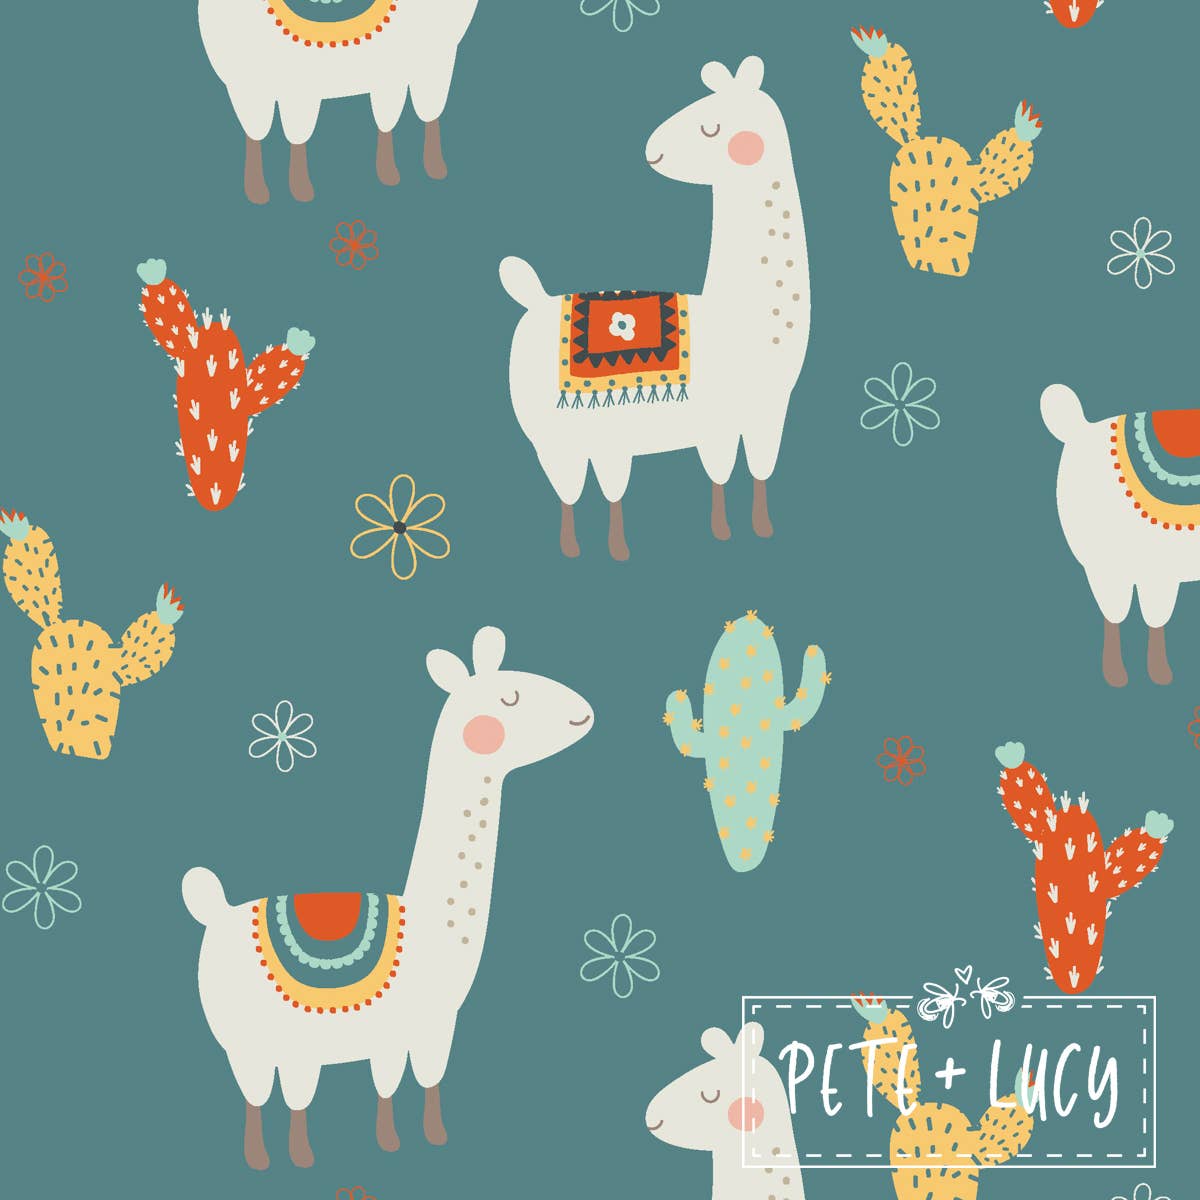 PETE + LUCY Floral Llama Cactus Trumpet Sleeve Ruffle Girls Dress